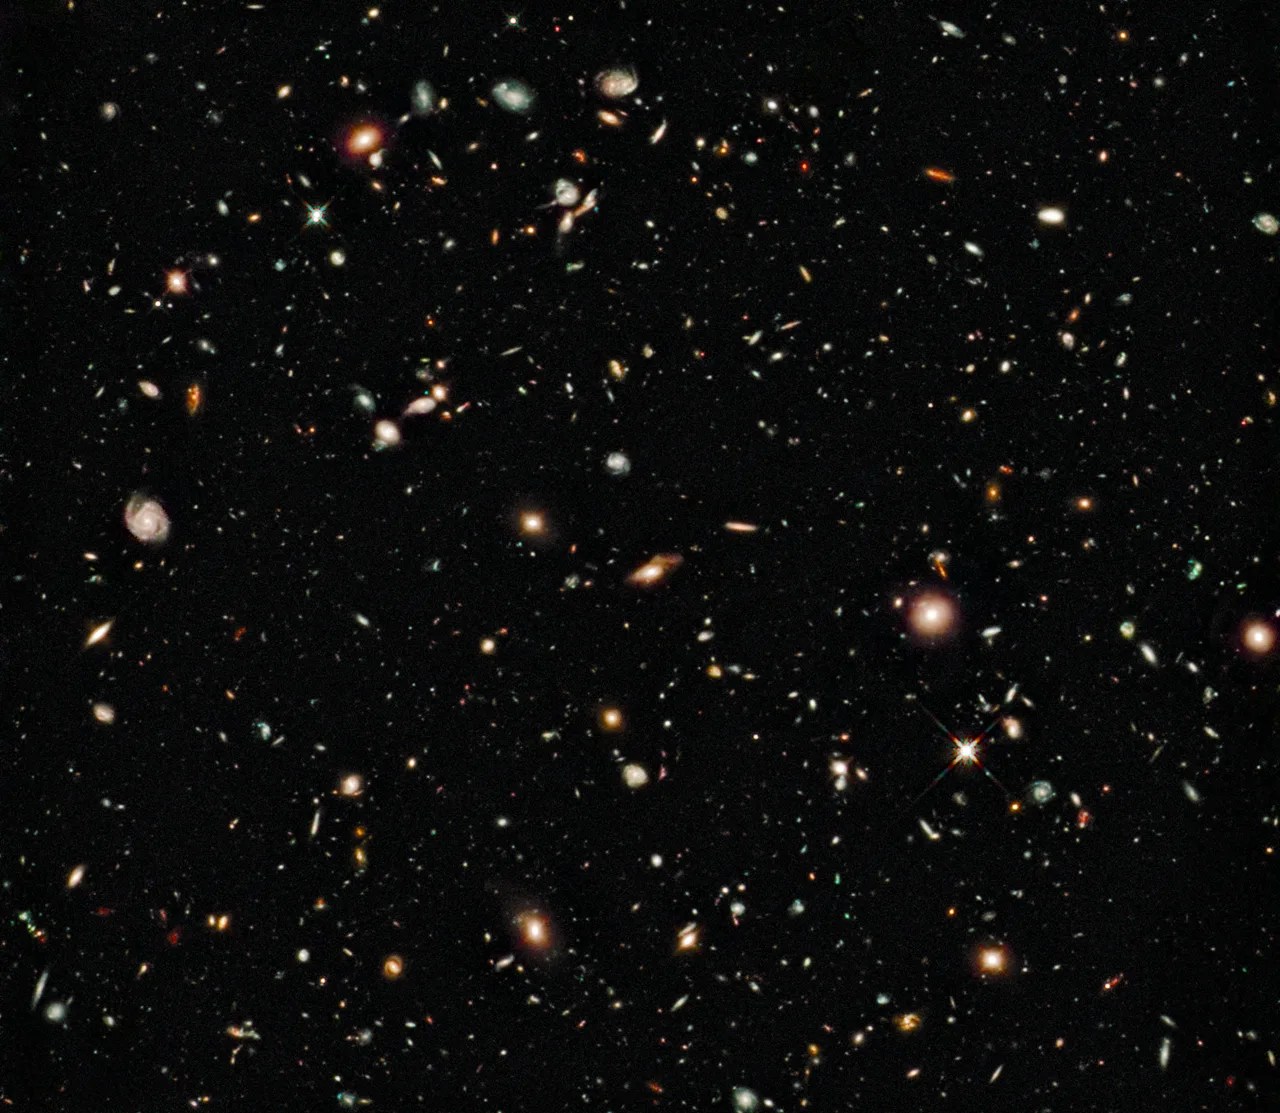 2009 updated Hubble Ultra Deep Field image